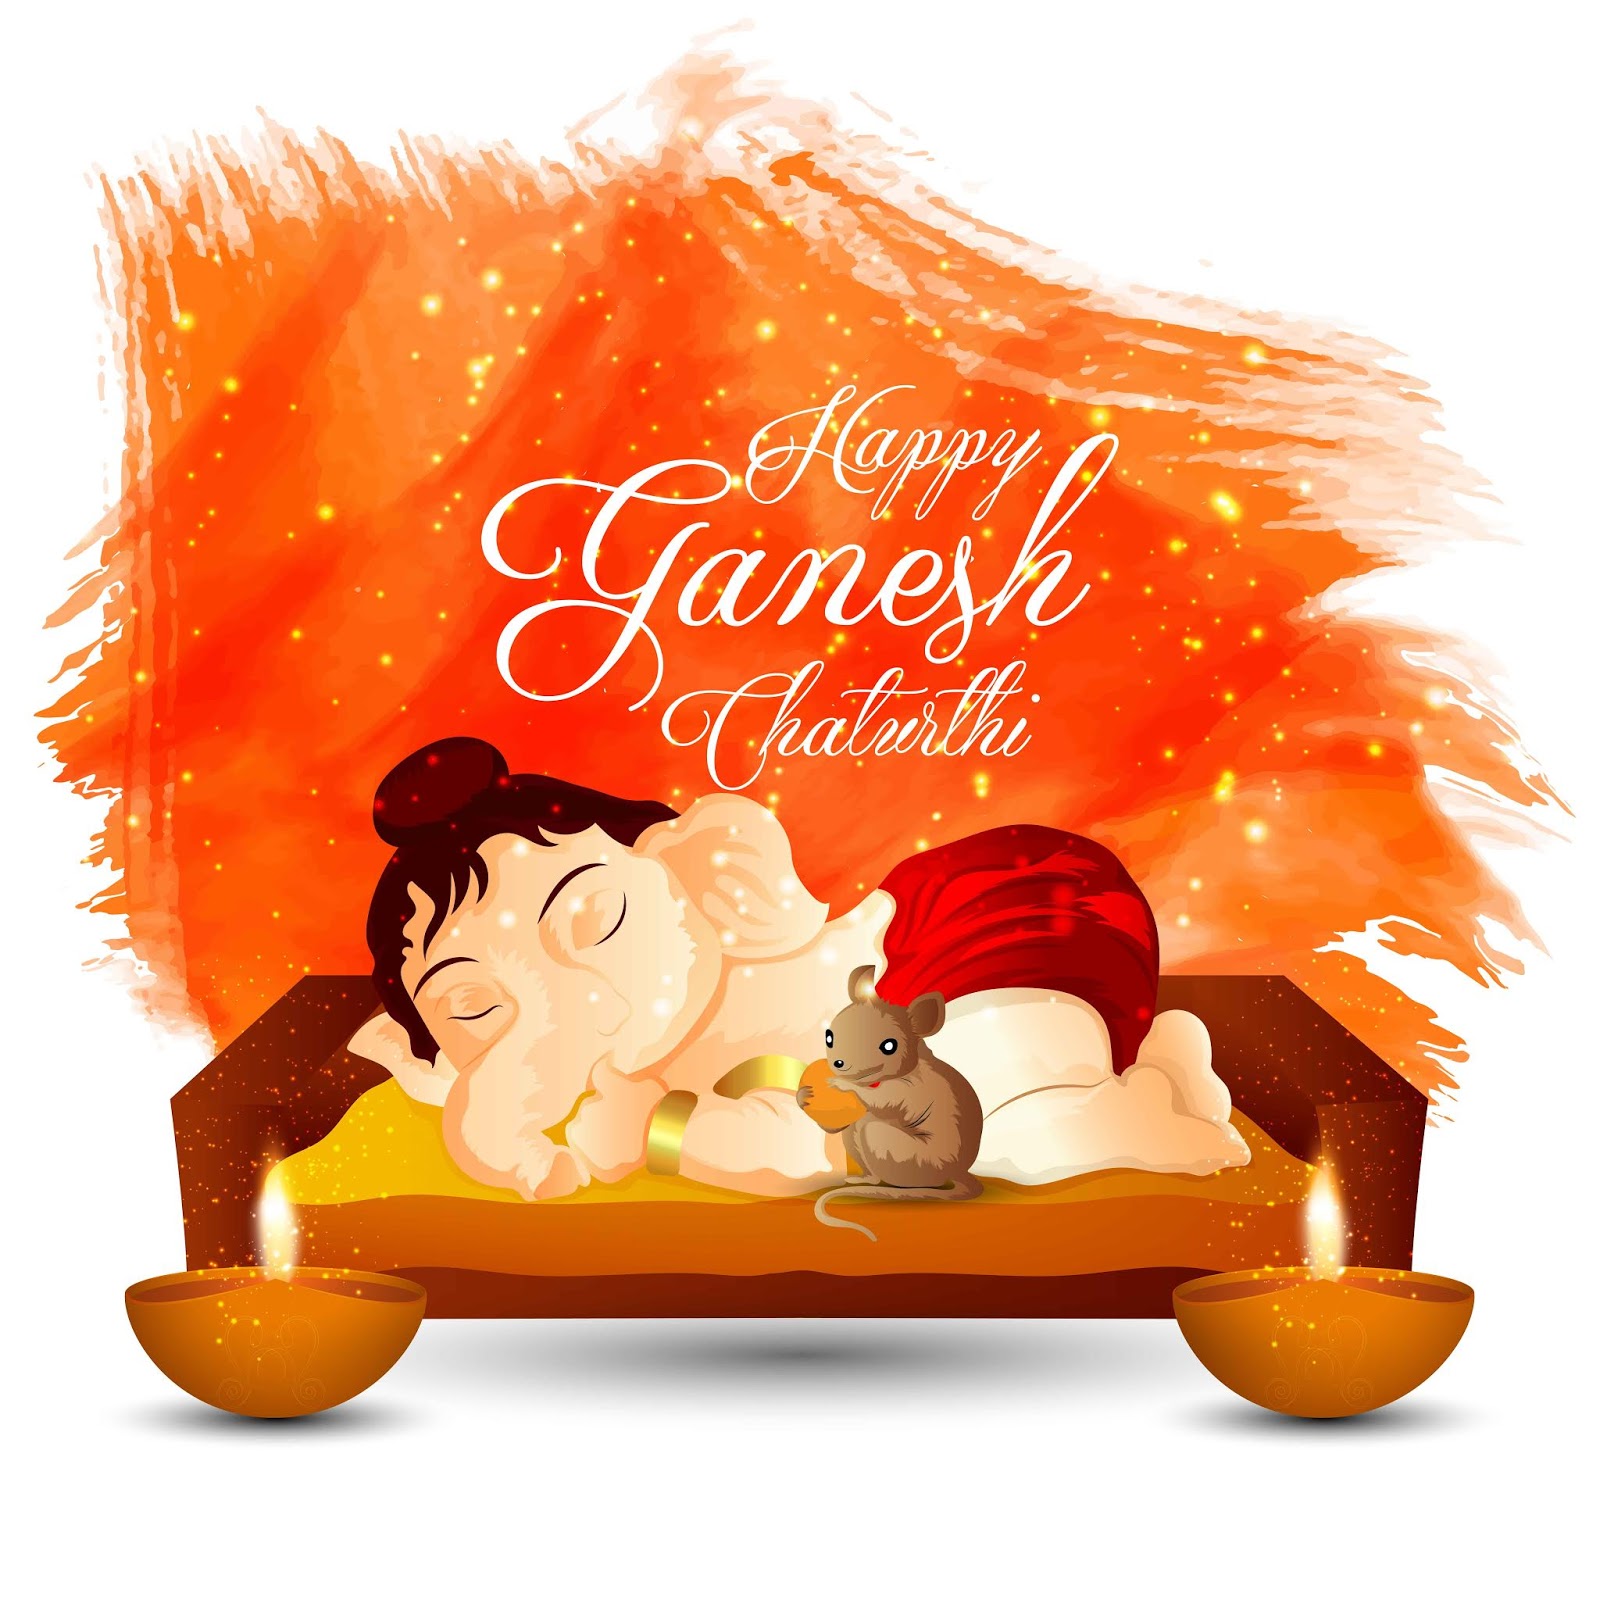 Wonderful Images For Wishing Happy Ganesh Chaturti 